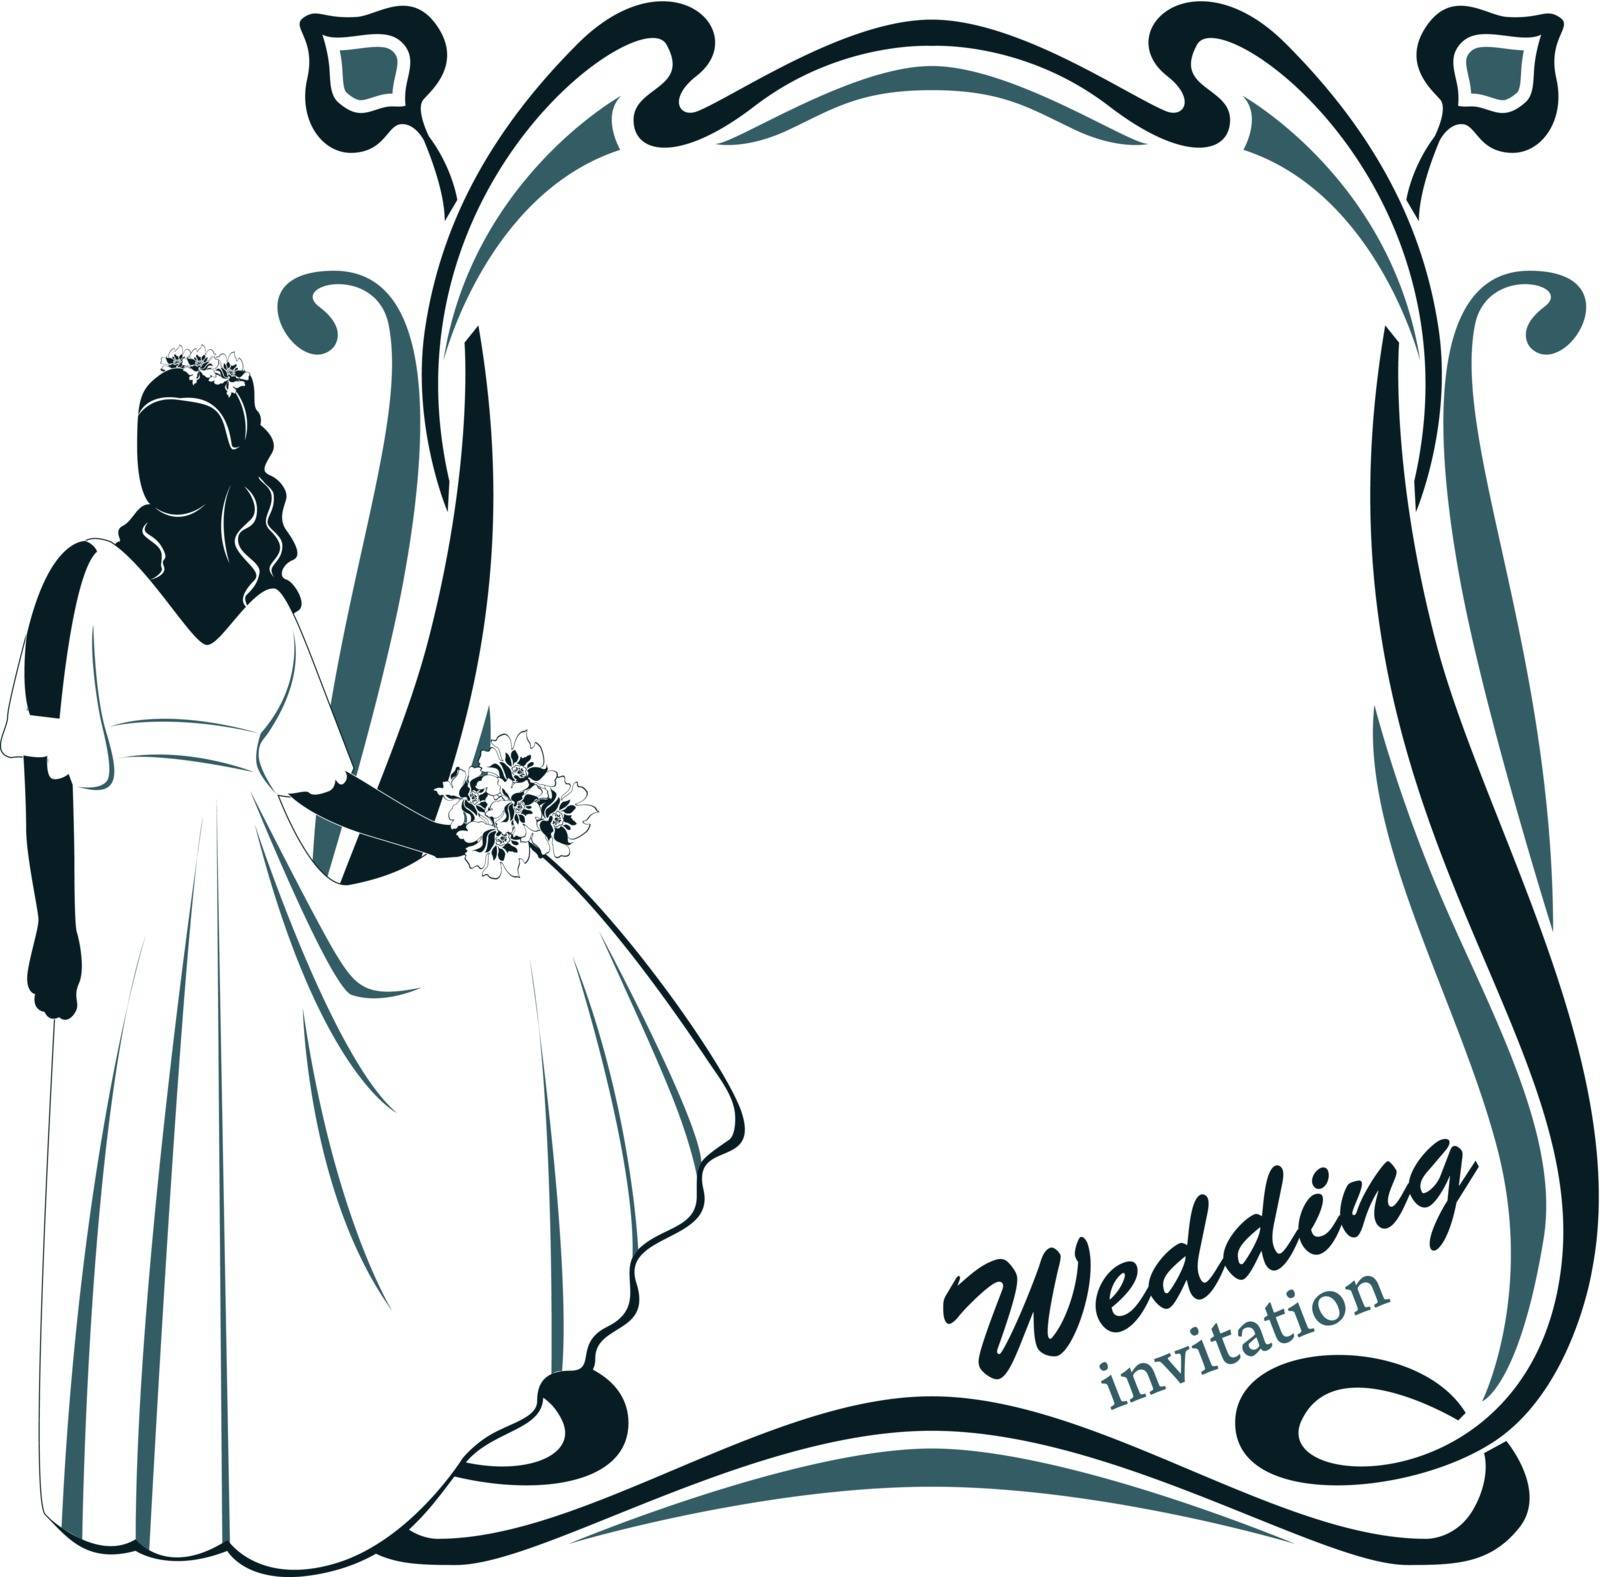 Invitation with Wedding pair by sateda